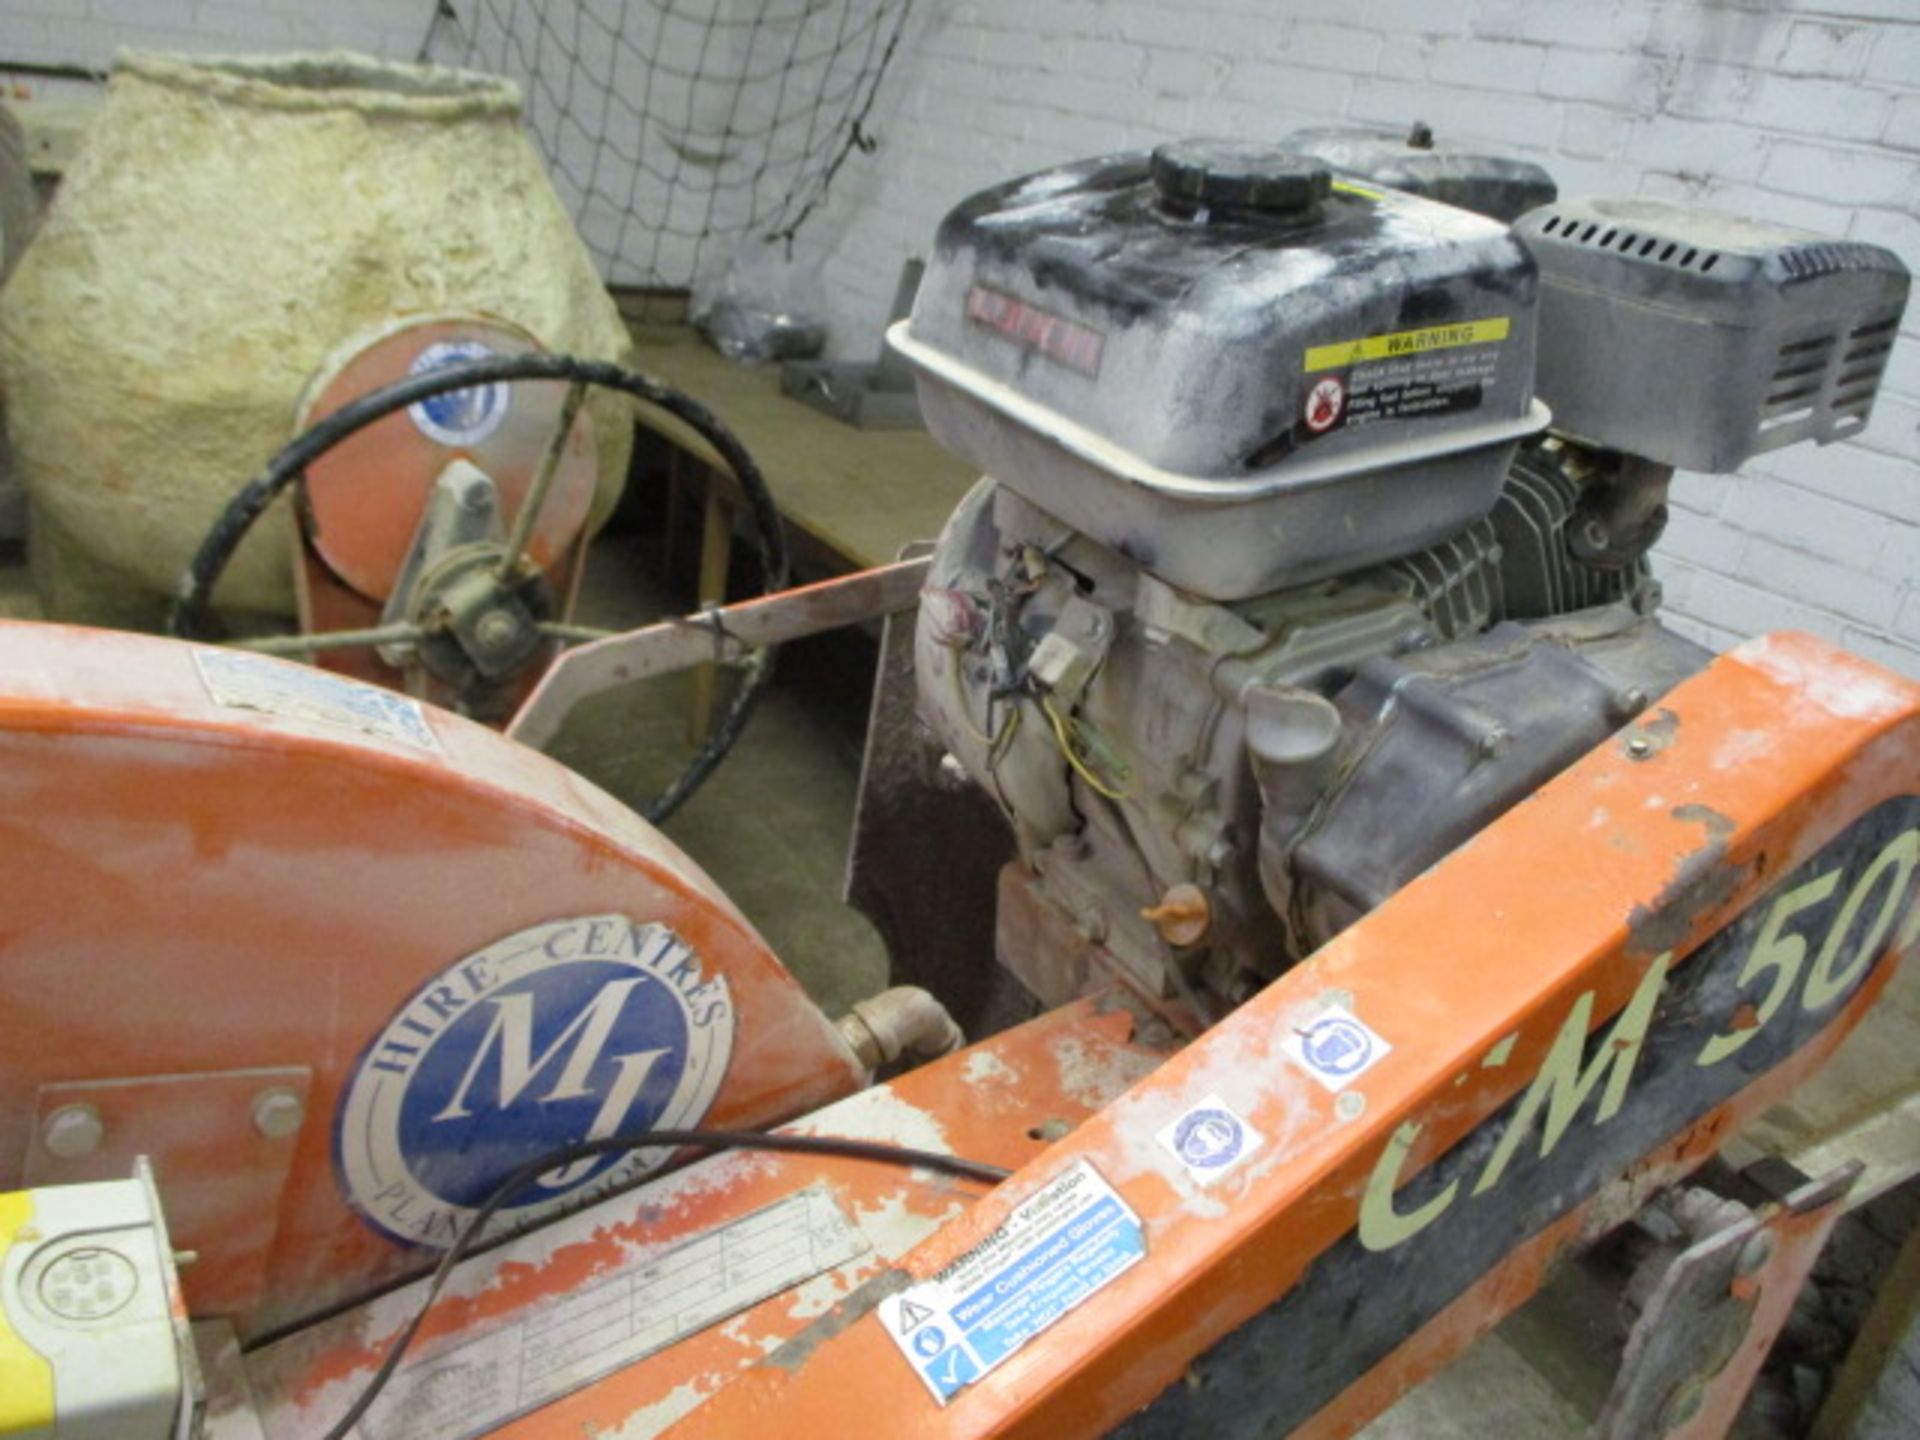 Clipper Norton CM501 site saw, petrol engine (320990) - Image 2 of 2